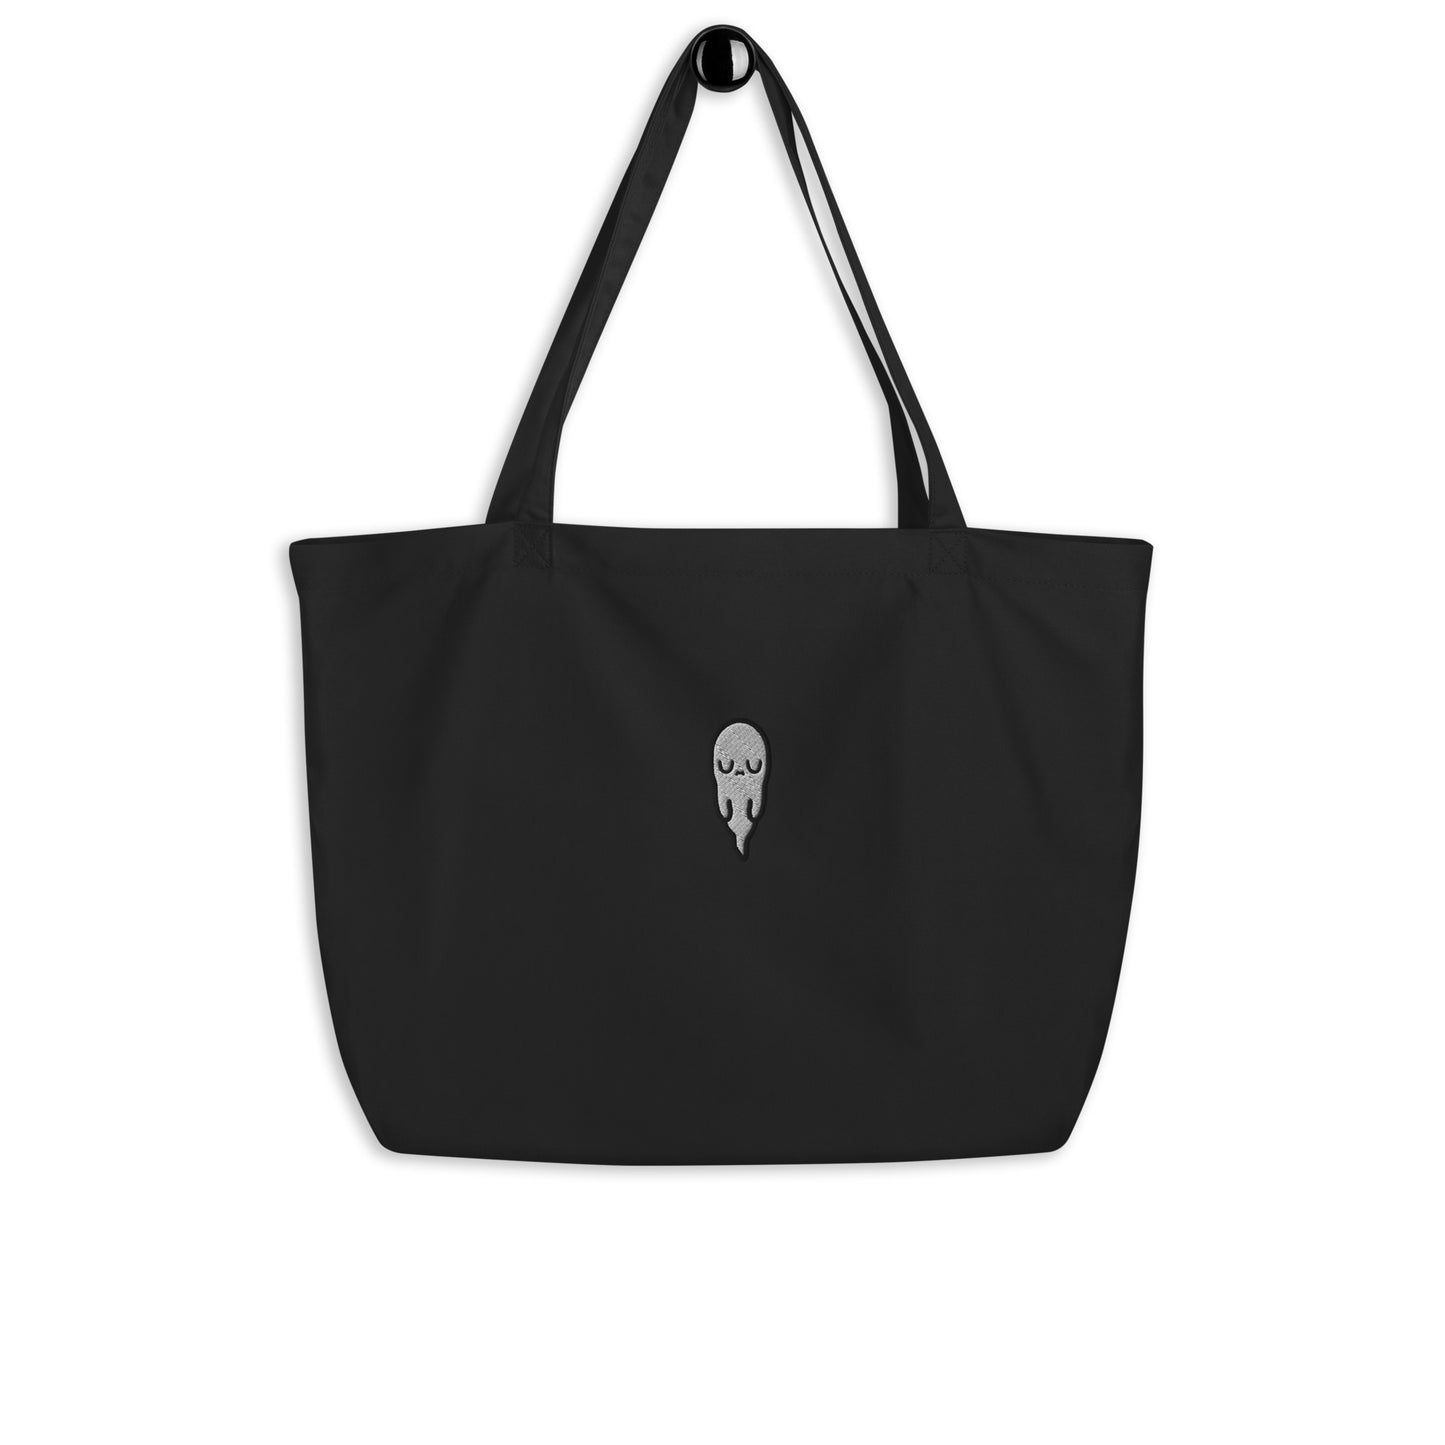 Aughostus™ - Large organic tote bag